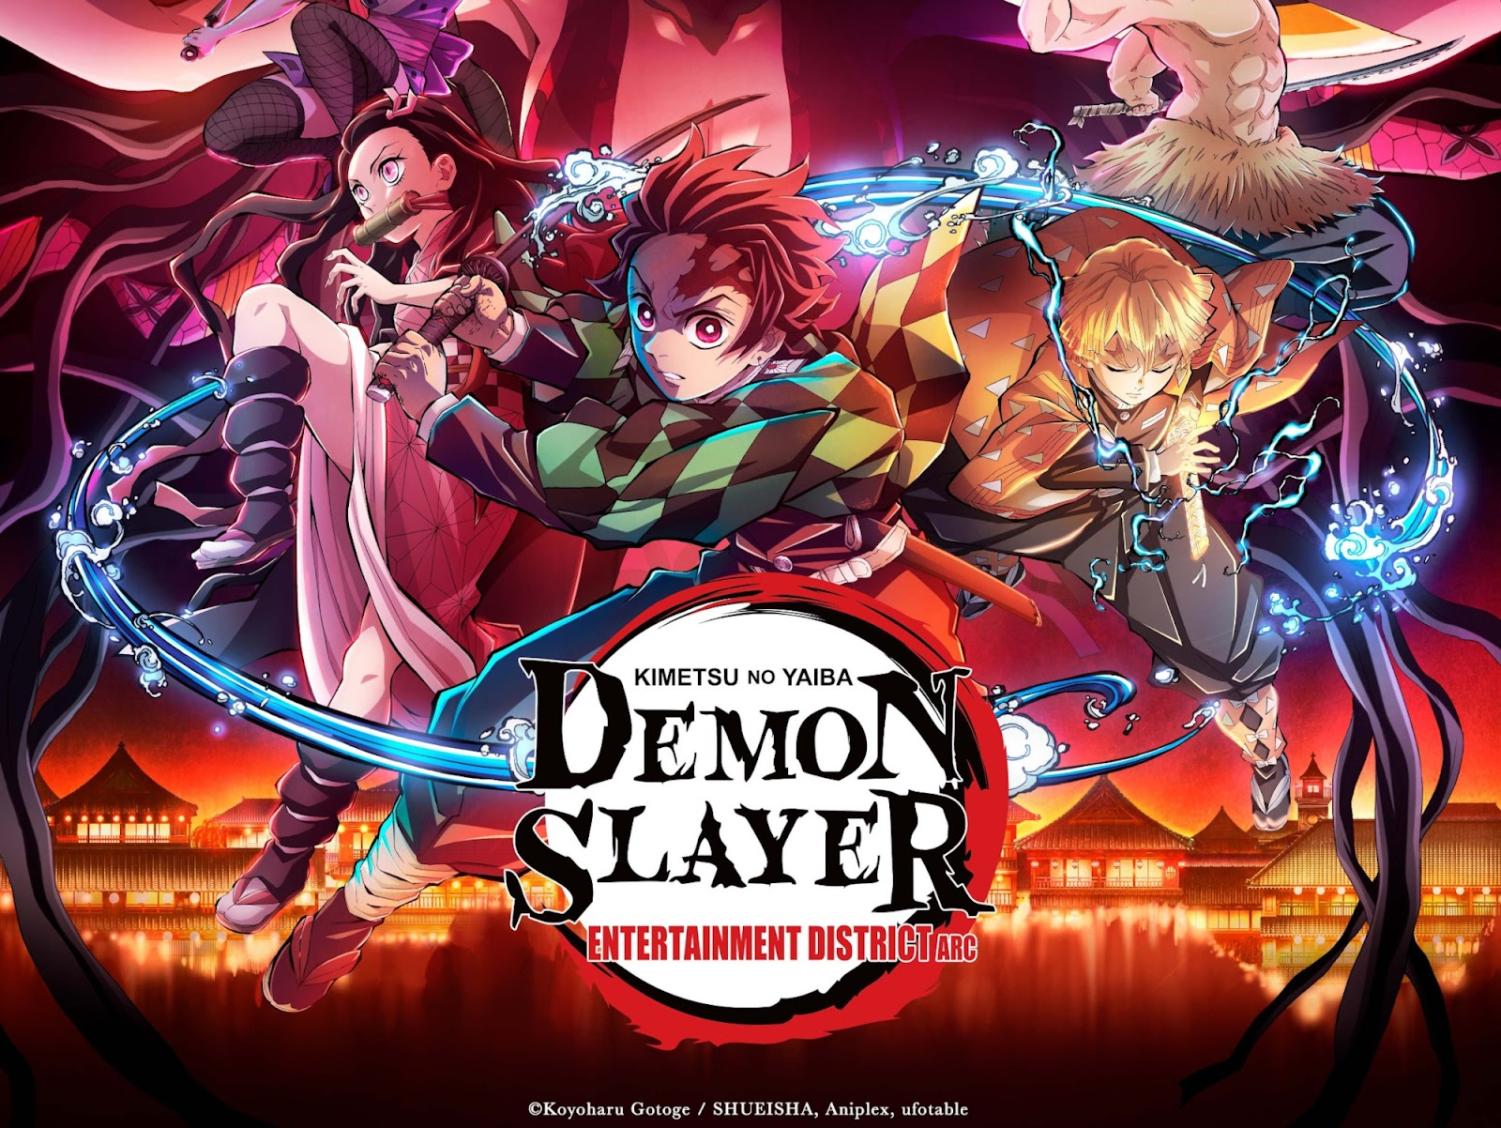 Demon Slayer Season 2 Entertainment District Arc will release on